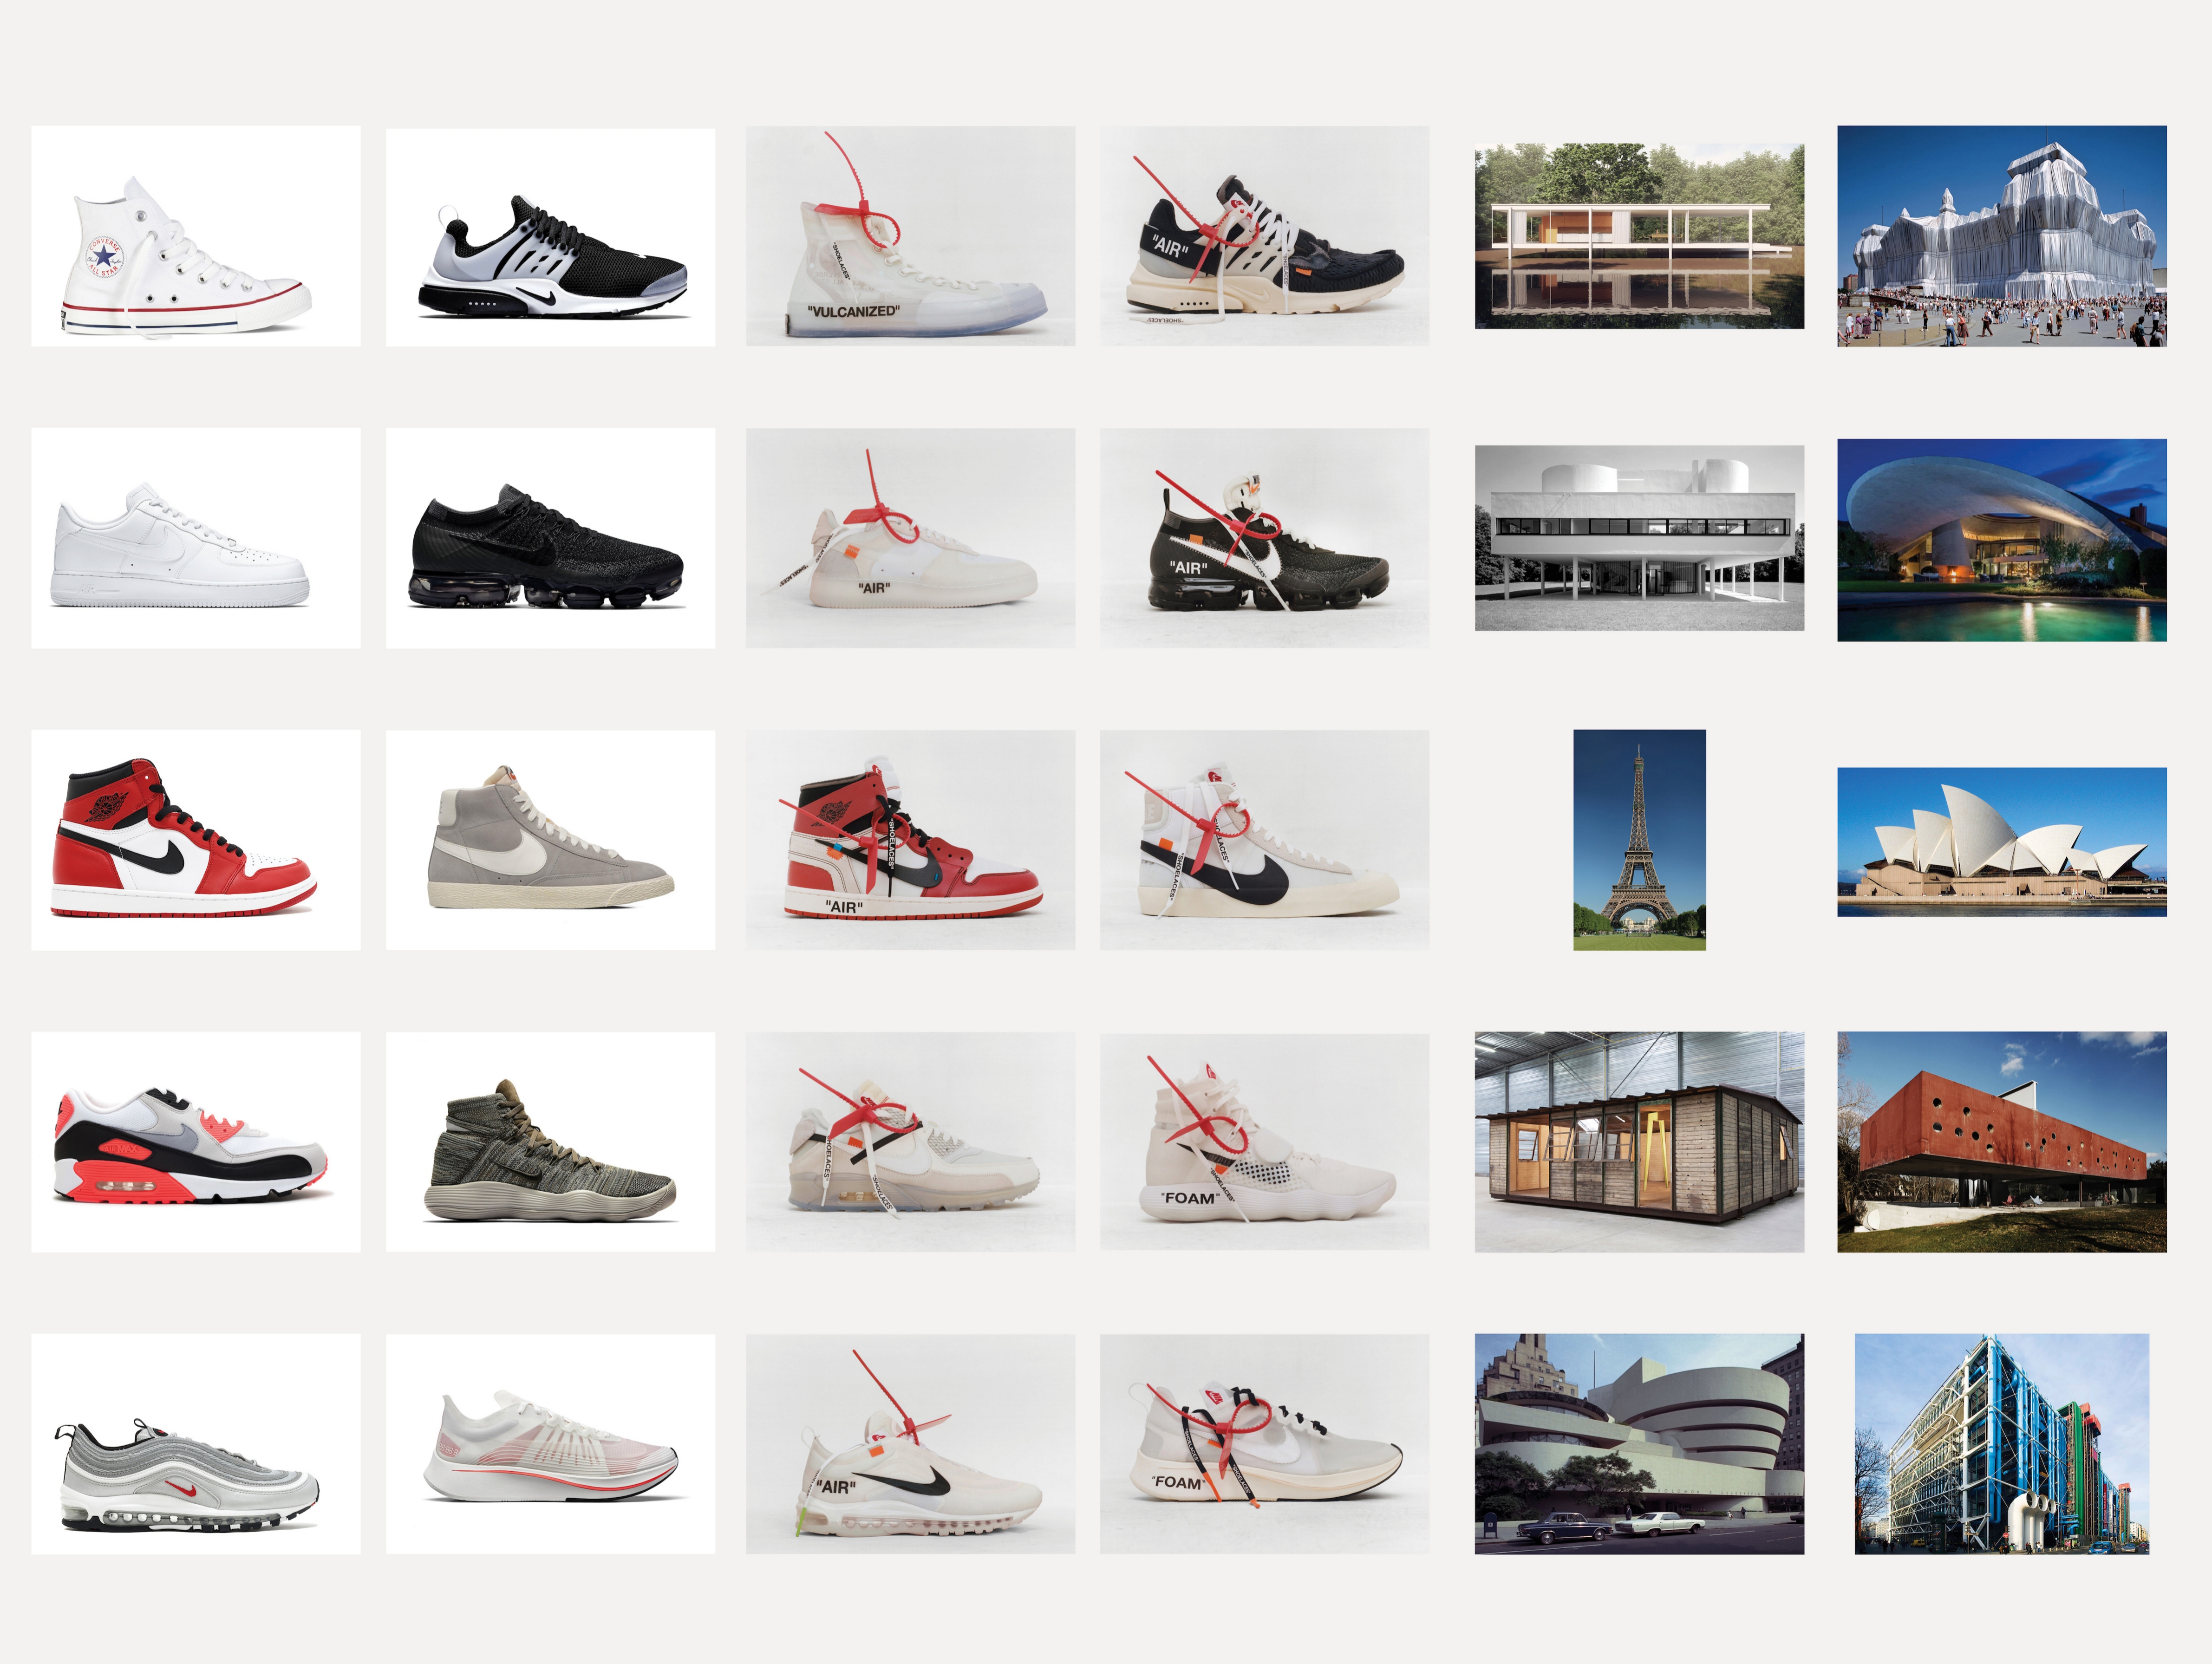 Designer Virgil Abloh Reconstructs 10 Iconic Nike Shoes